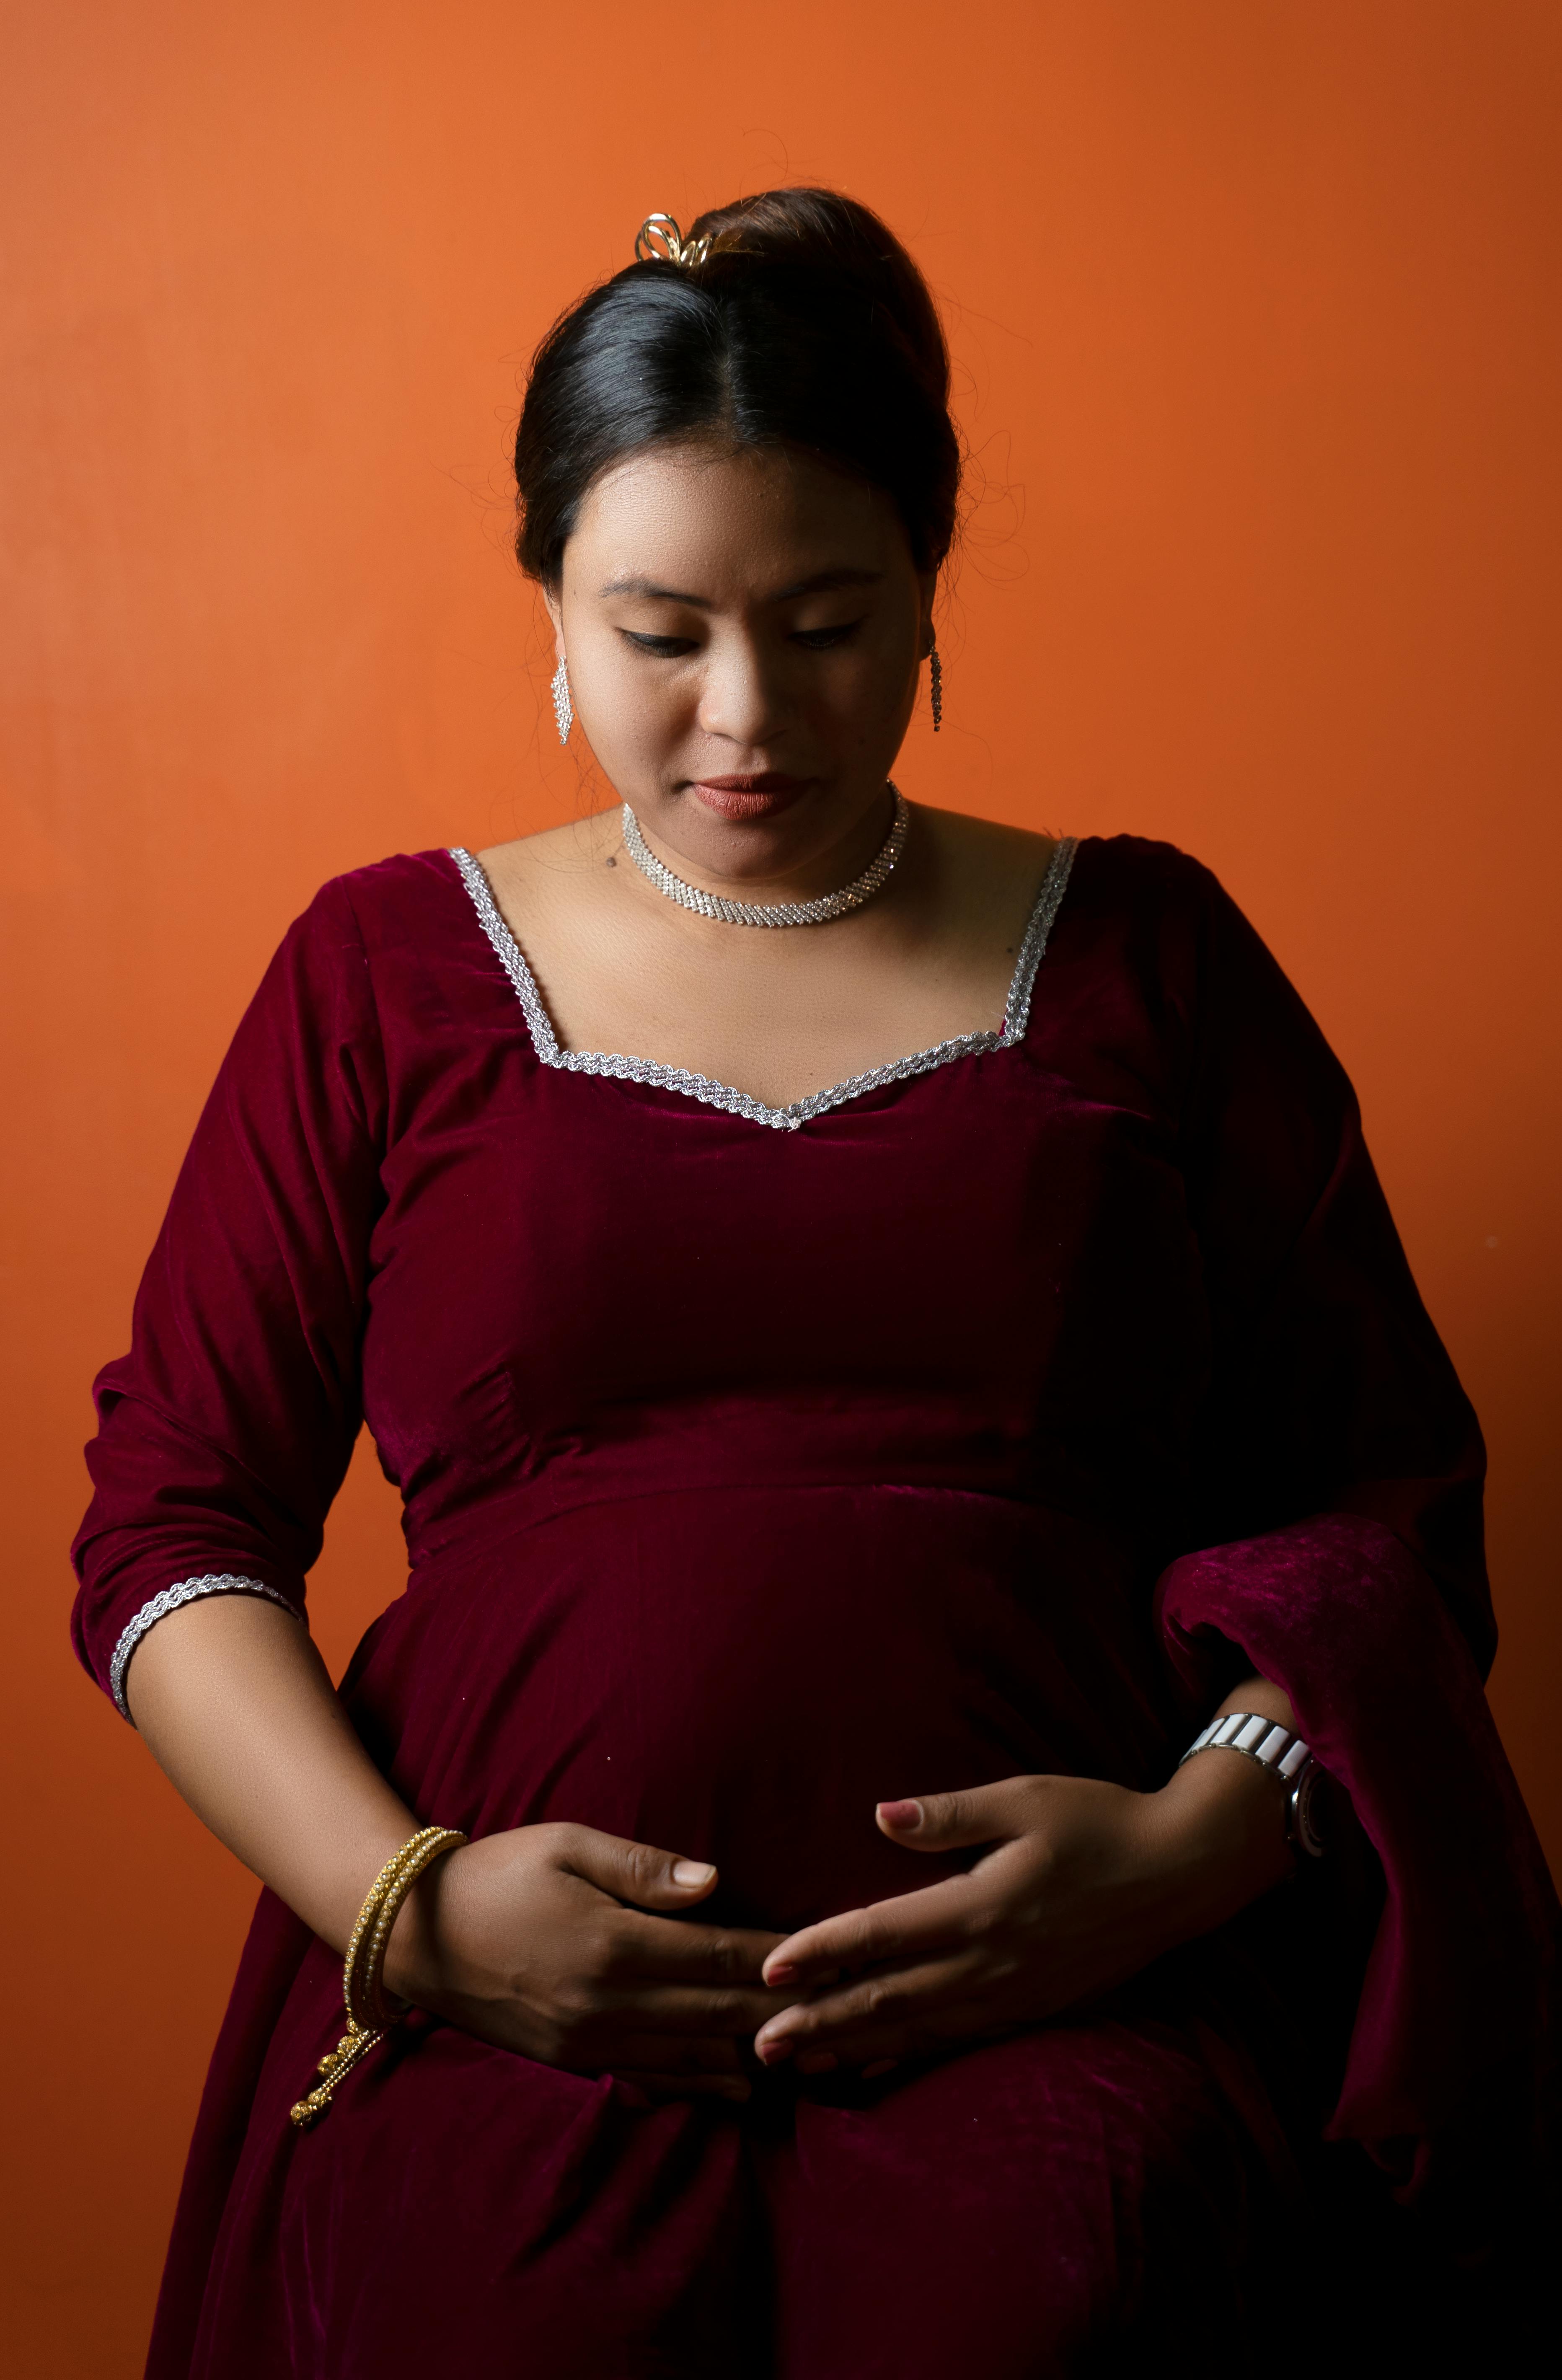 Pregnant Woman Wearing Saree · Free Stock Photo